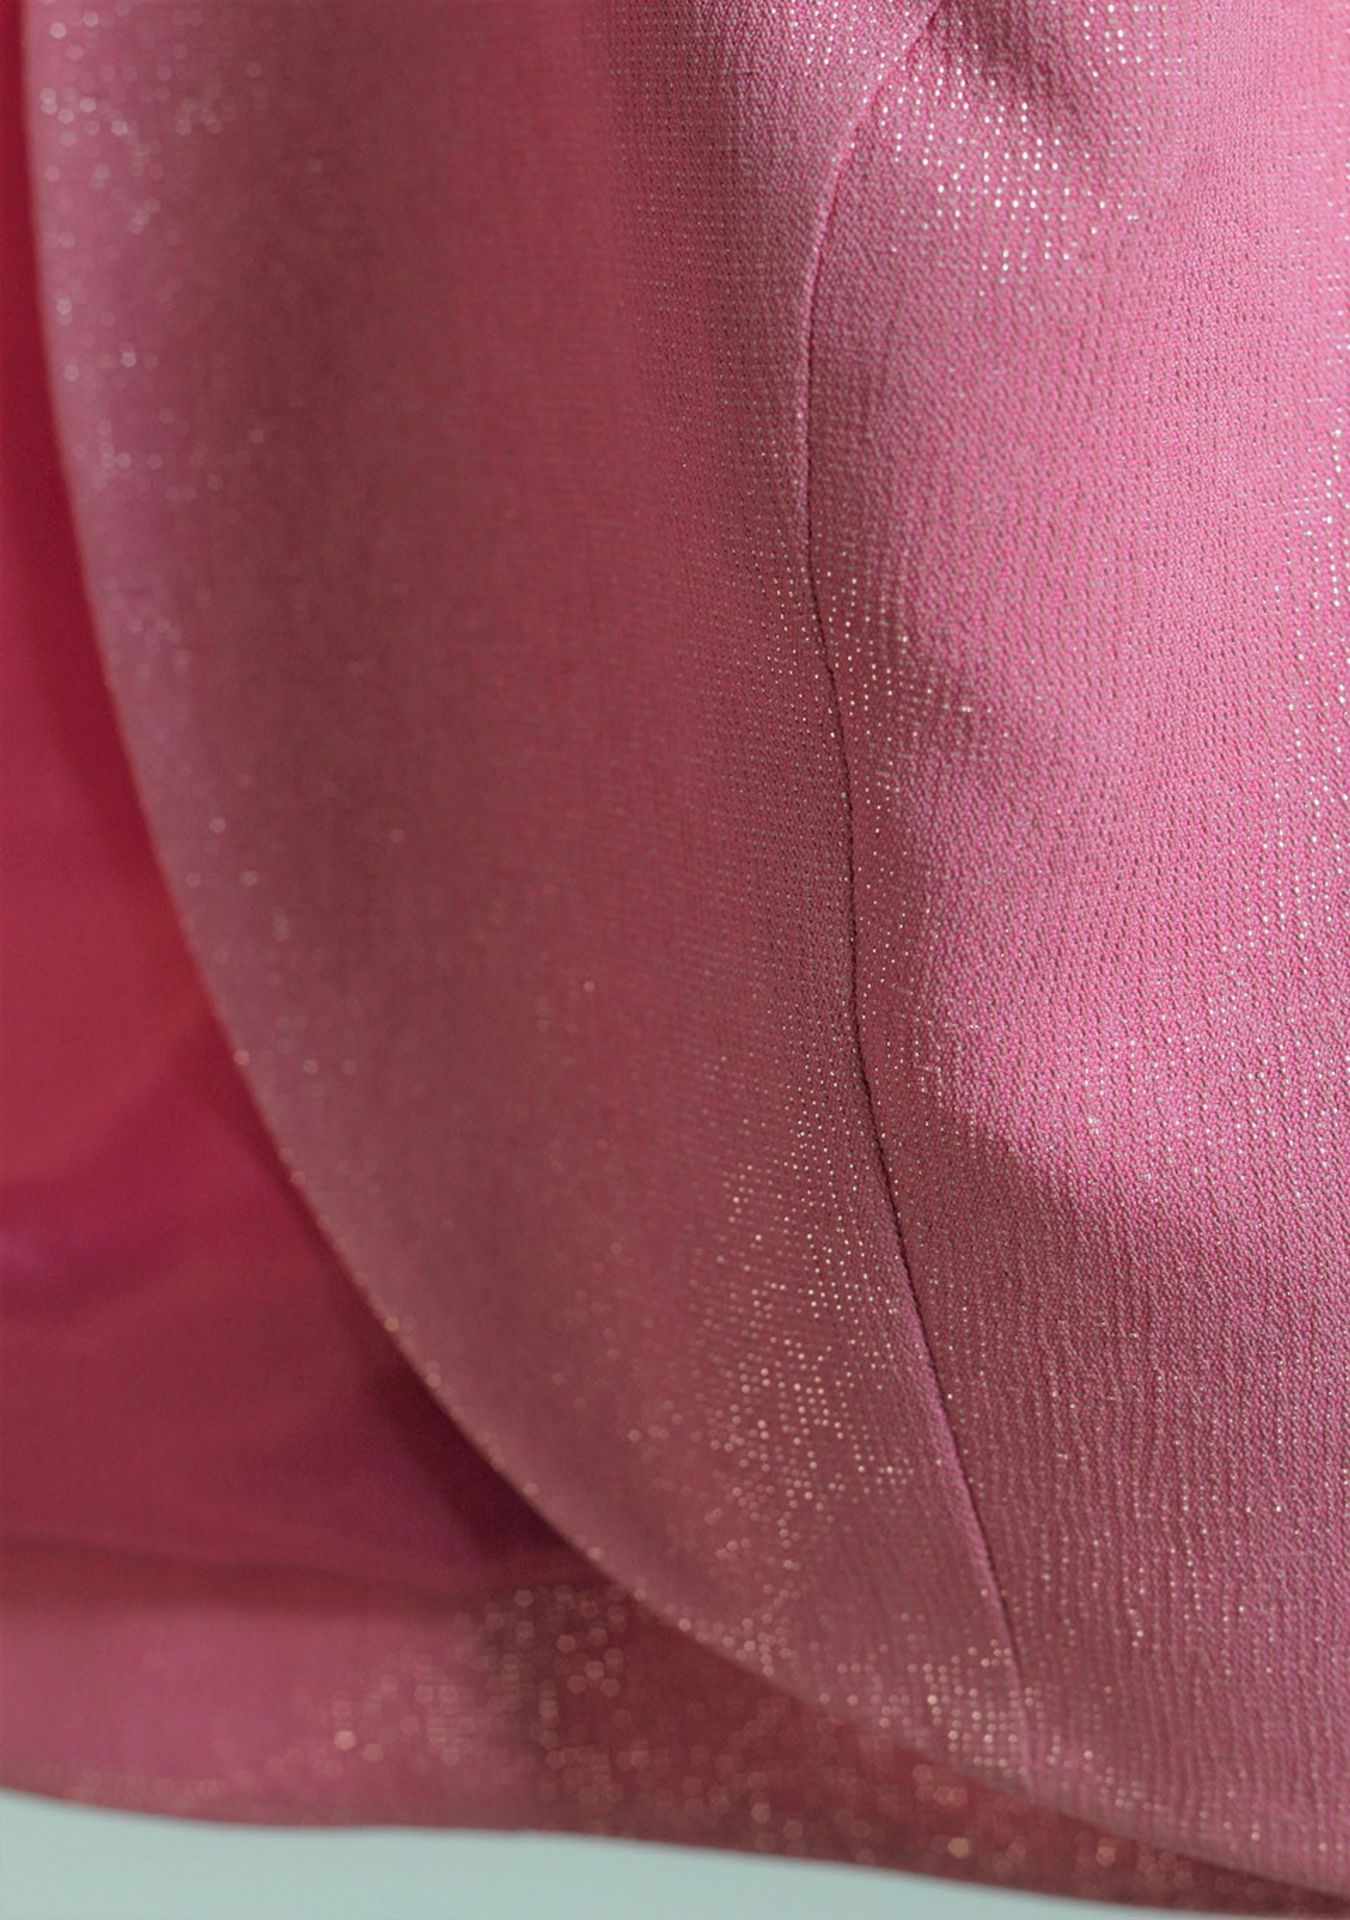 1 x Boutique Le Duc Pink Waistcoat - Size: L - Material: 49% Cotton, 40% Acetate, 11% Poly metal - Image 6 of 7